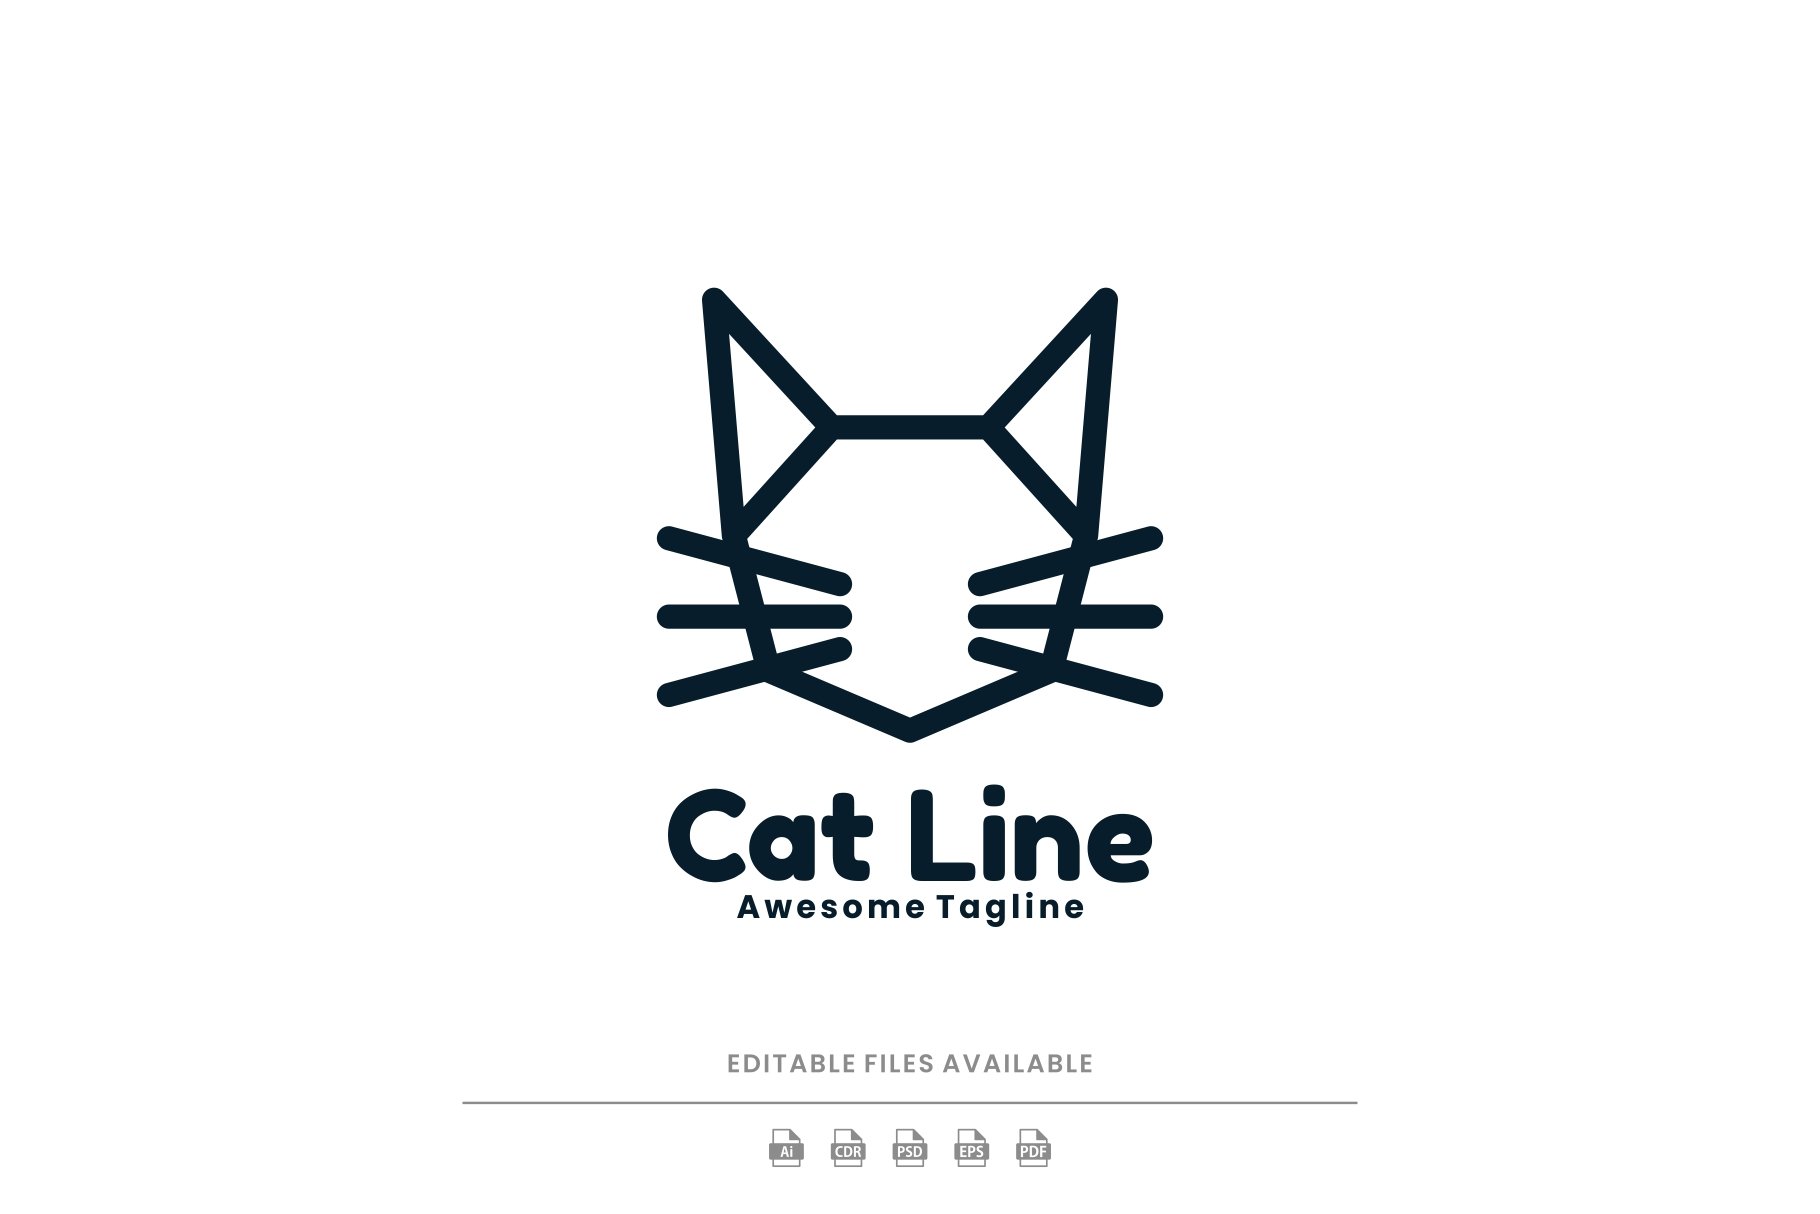 Cat Line Art Logo cover image.